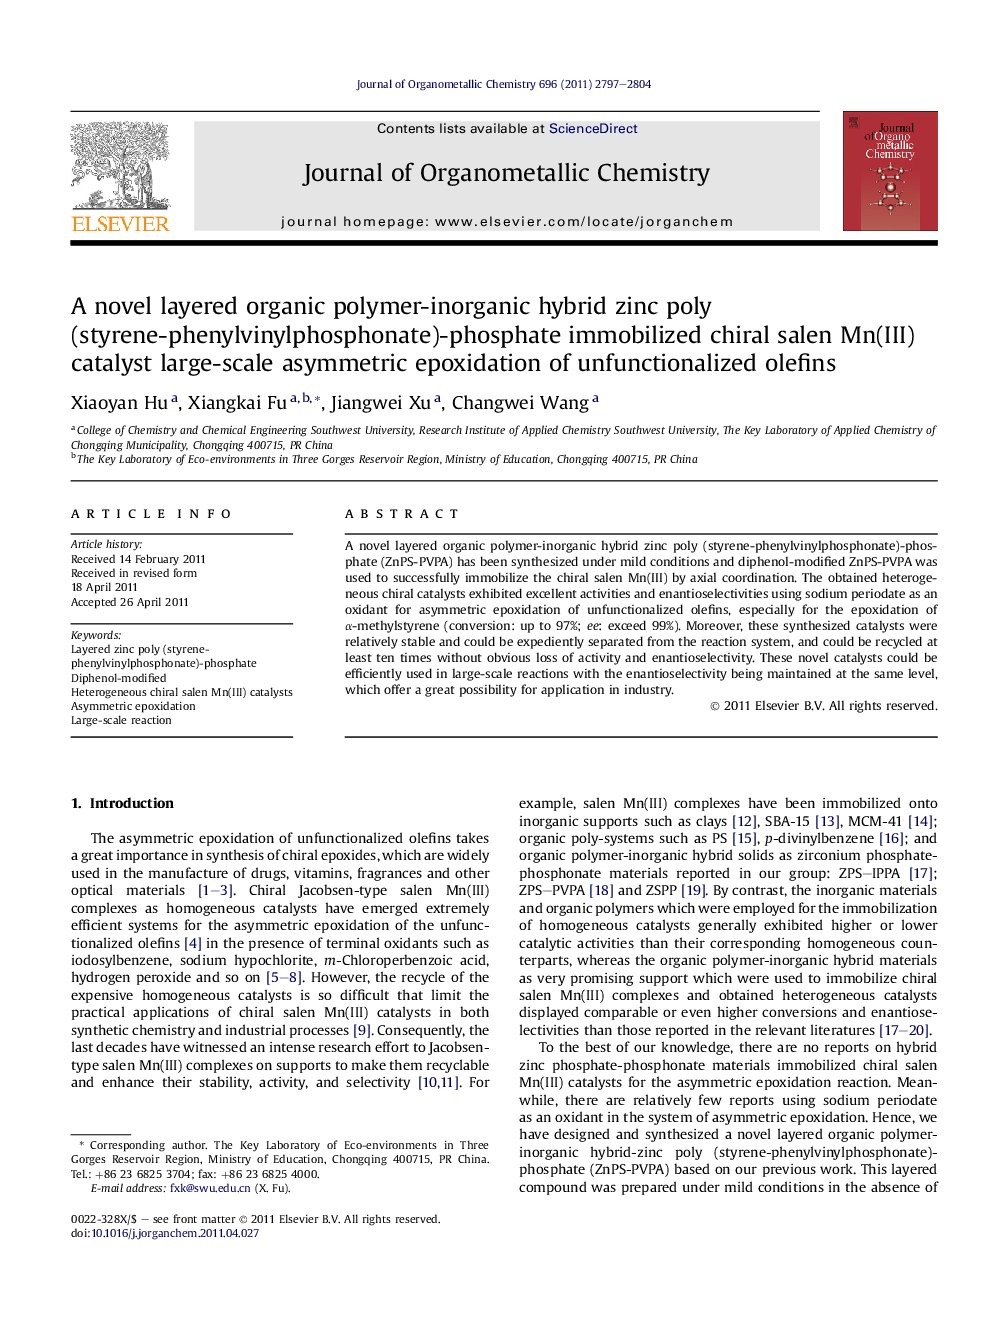 A novel layered organic polymer-inorganic hybrid zinc poly (styrene-phenylvinylphosphonate)-phosphate immobilized chiral salen Mn(III) catalyst large-scale asymmetric epoxidation of unfunctionalized olefins